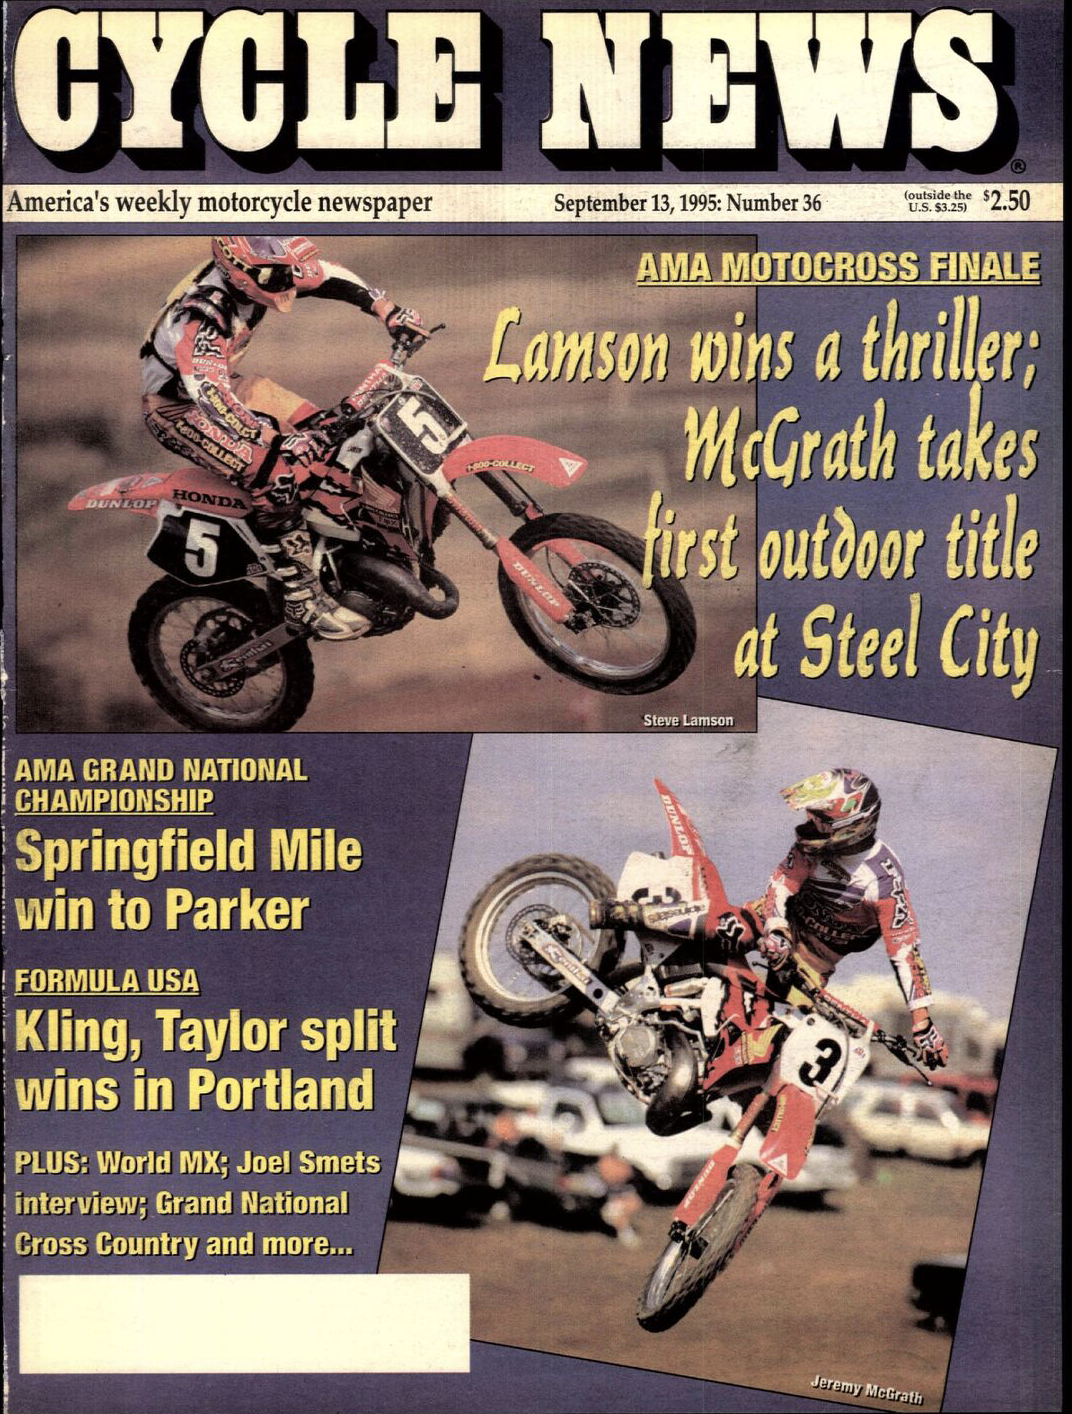 Recapping the Full 1995 AMA Motocross Season